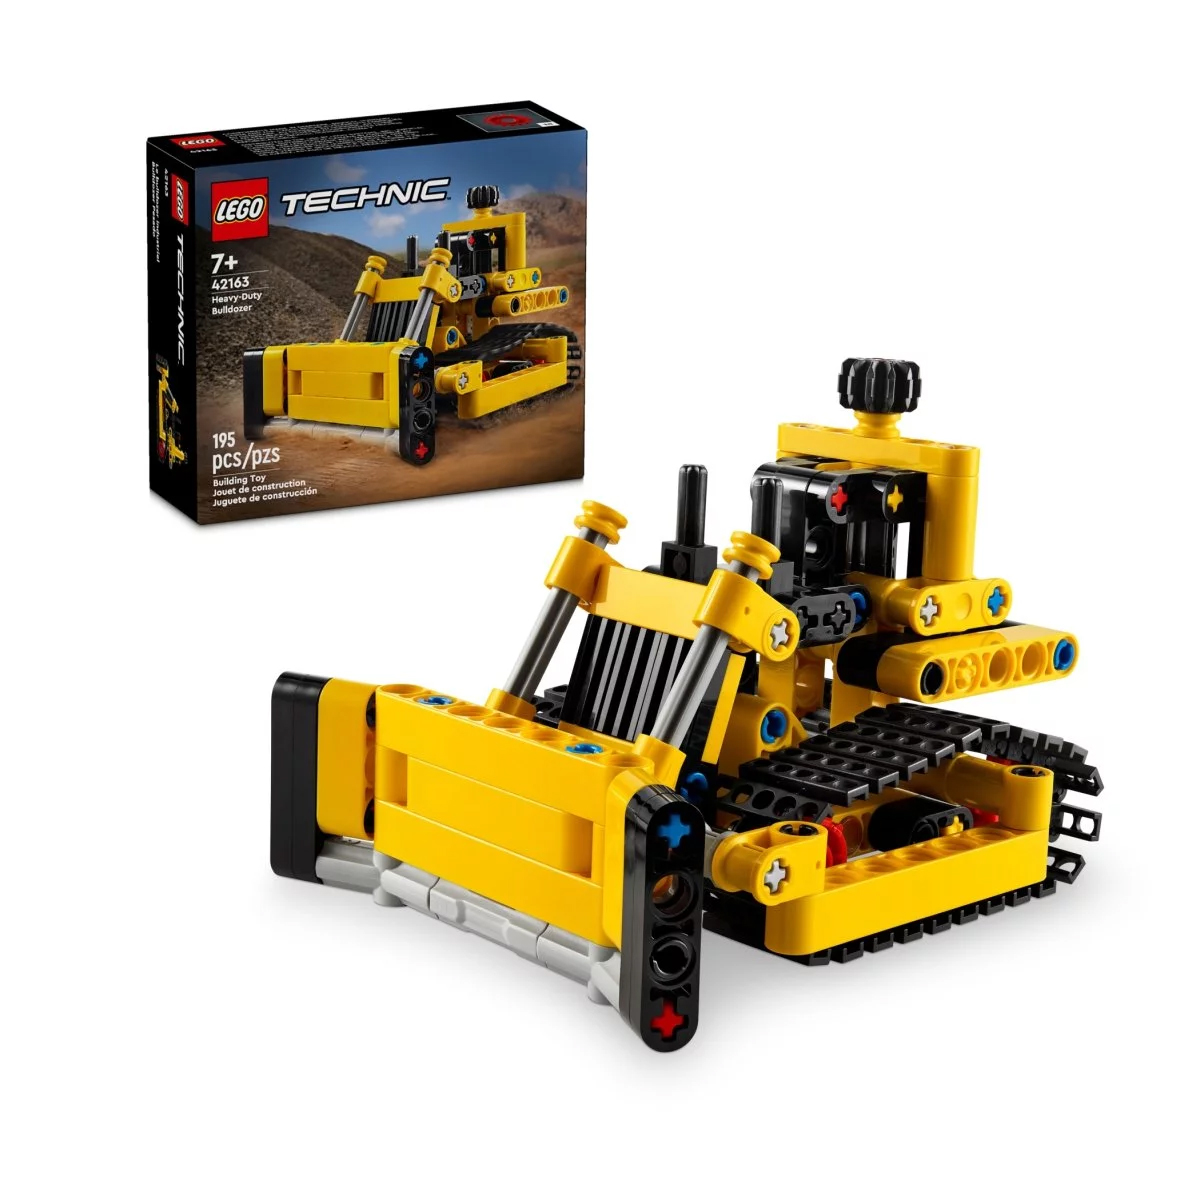 Конструктор Lego Technic Heavy-Duty Bulldozer 42163, 195 деталей конструкторы efko рото бульдозер